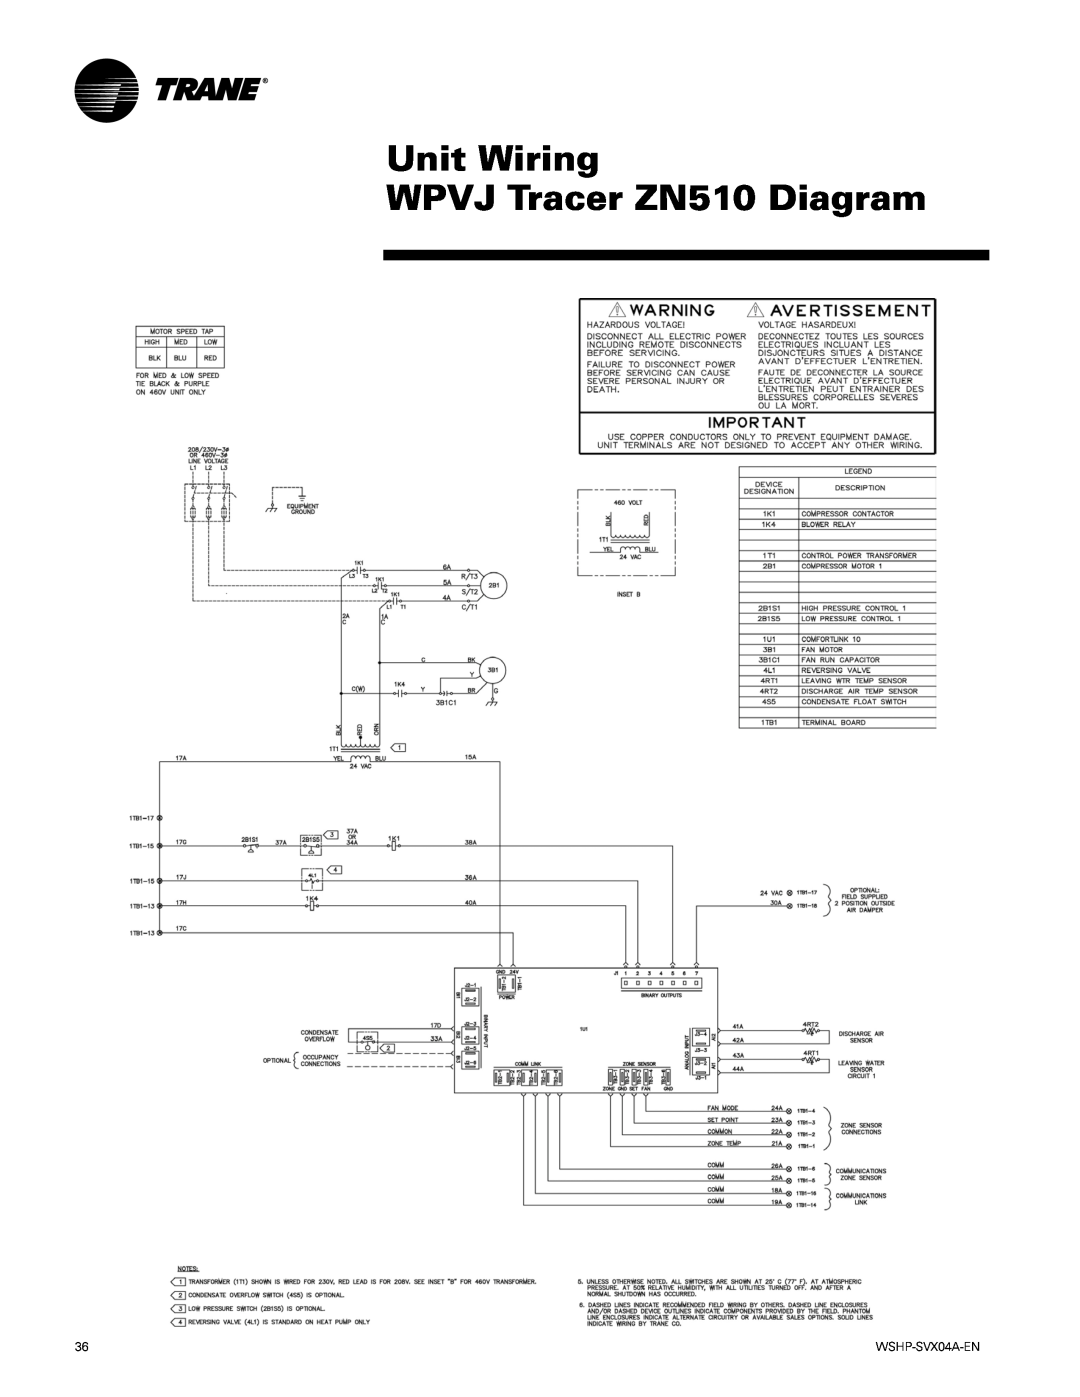 Trane WPHF manual Unit Wiring WPVJ Tracer ZN510 Diagram, WSHP-SVX04A-EN 